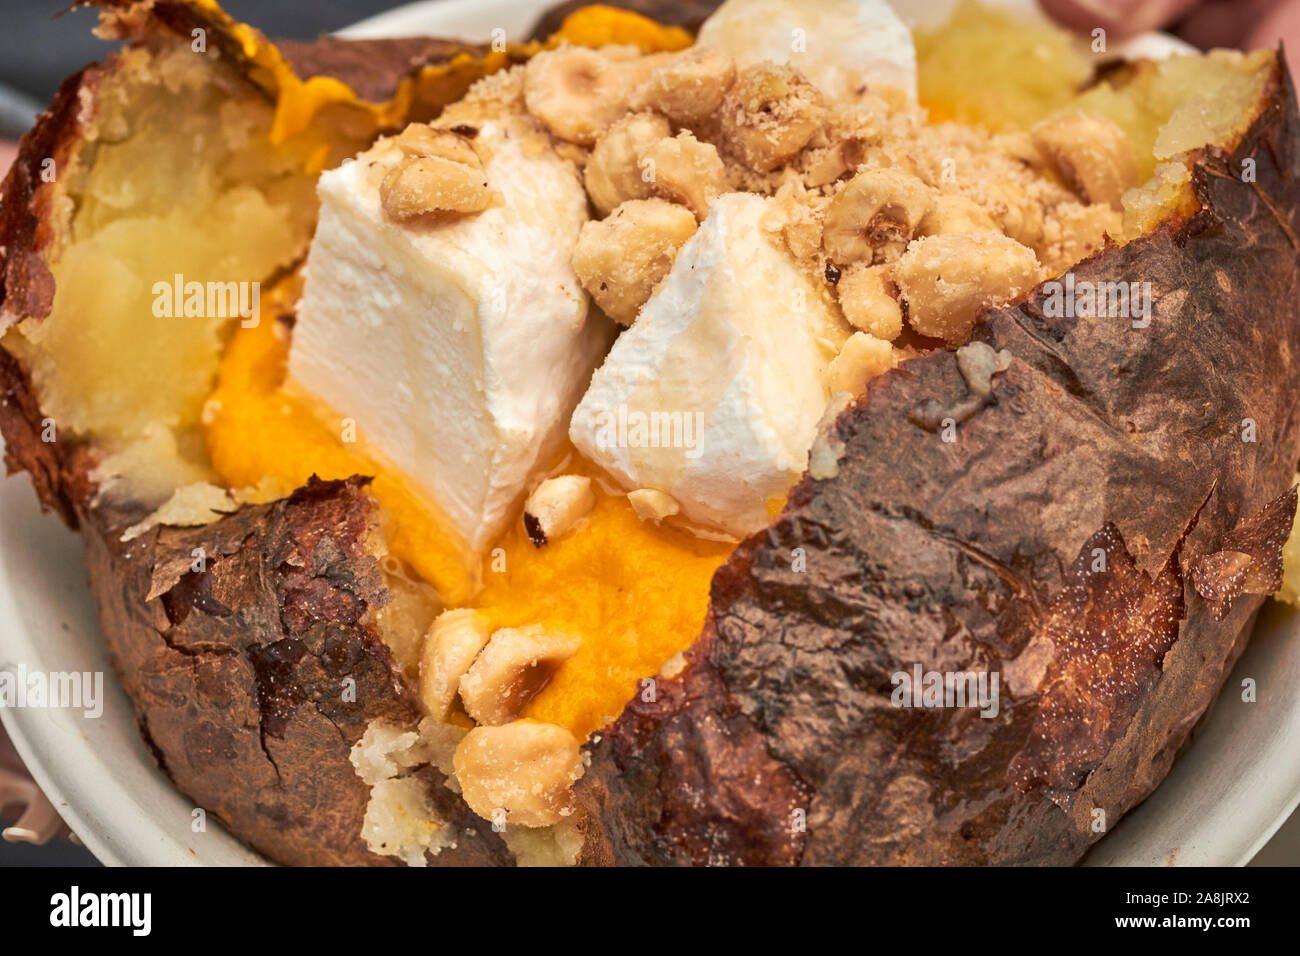 A Piemontese stuffed, baked potato. Italian/British fusion with a jacket potato, zucca, cheese, and hazelnuts. Stock Photo